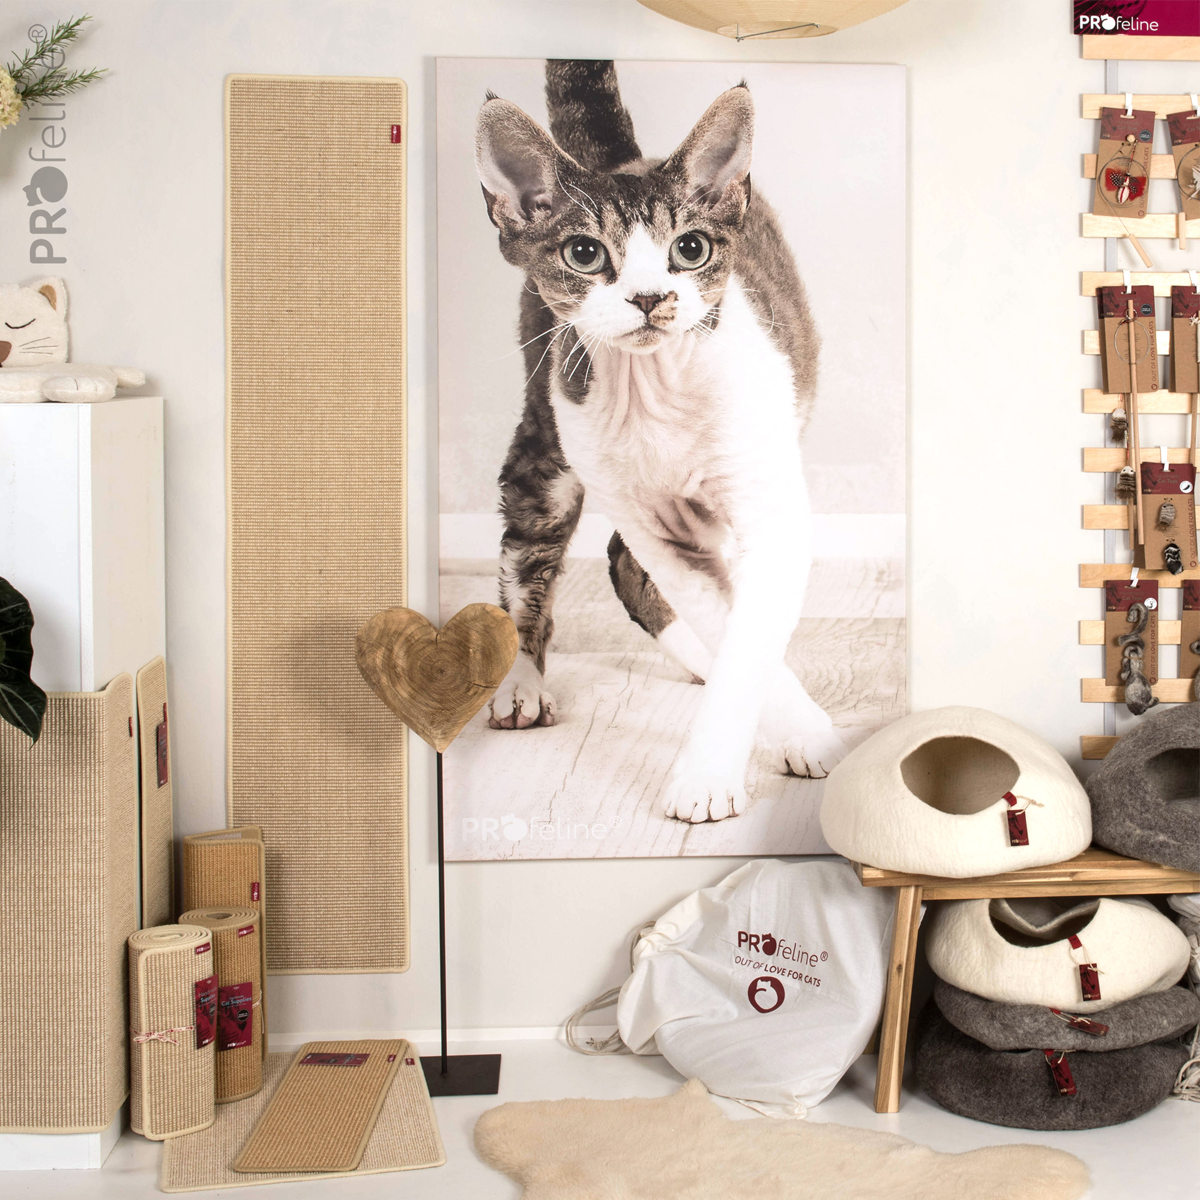 Profeline Cat Shop Has Handmade Cat Furniture | Buy at Made Moggie Australia.